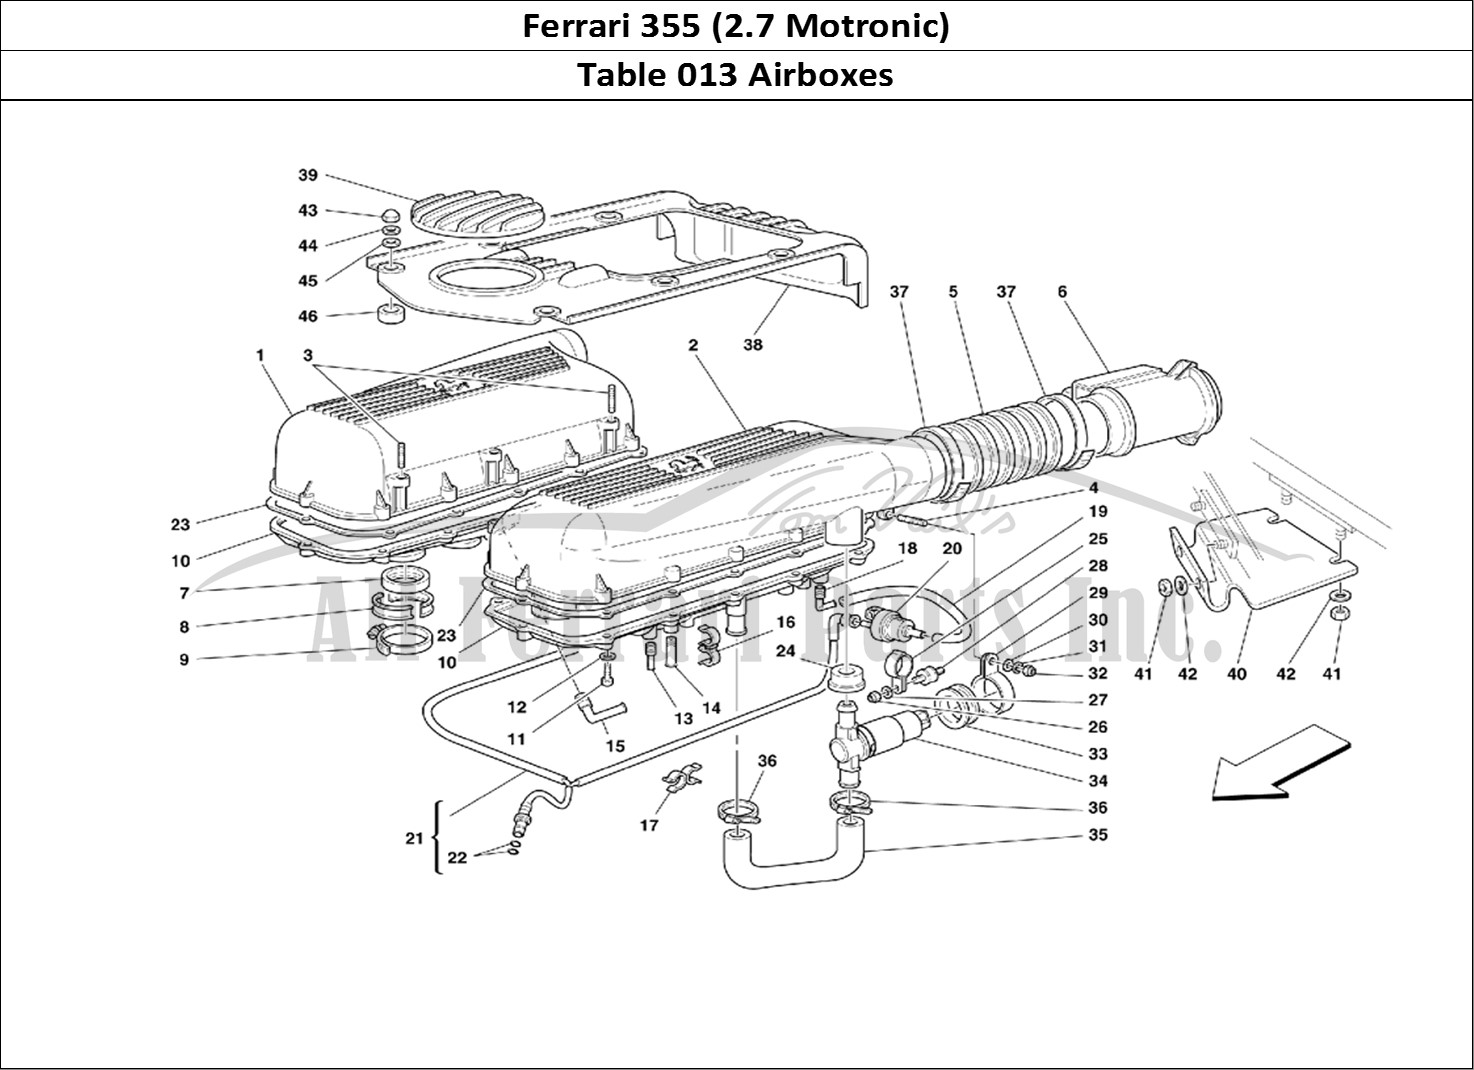 Ferrari Parts Ferrari 355 (2.7 Motronic) Page 013 Air Boxes